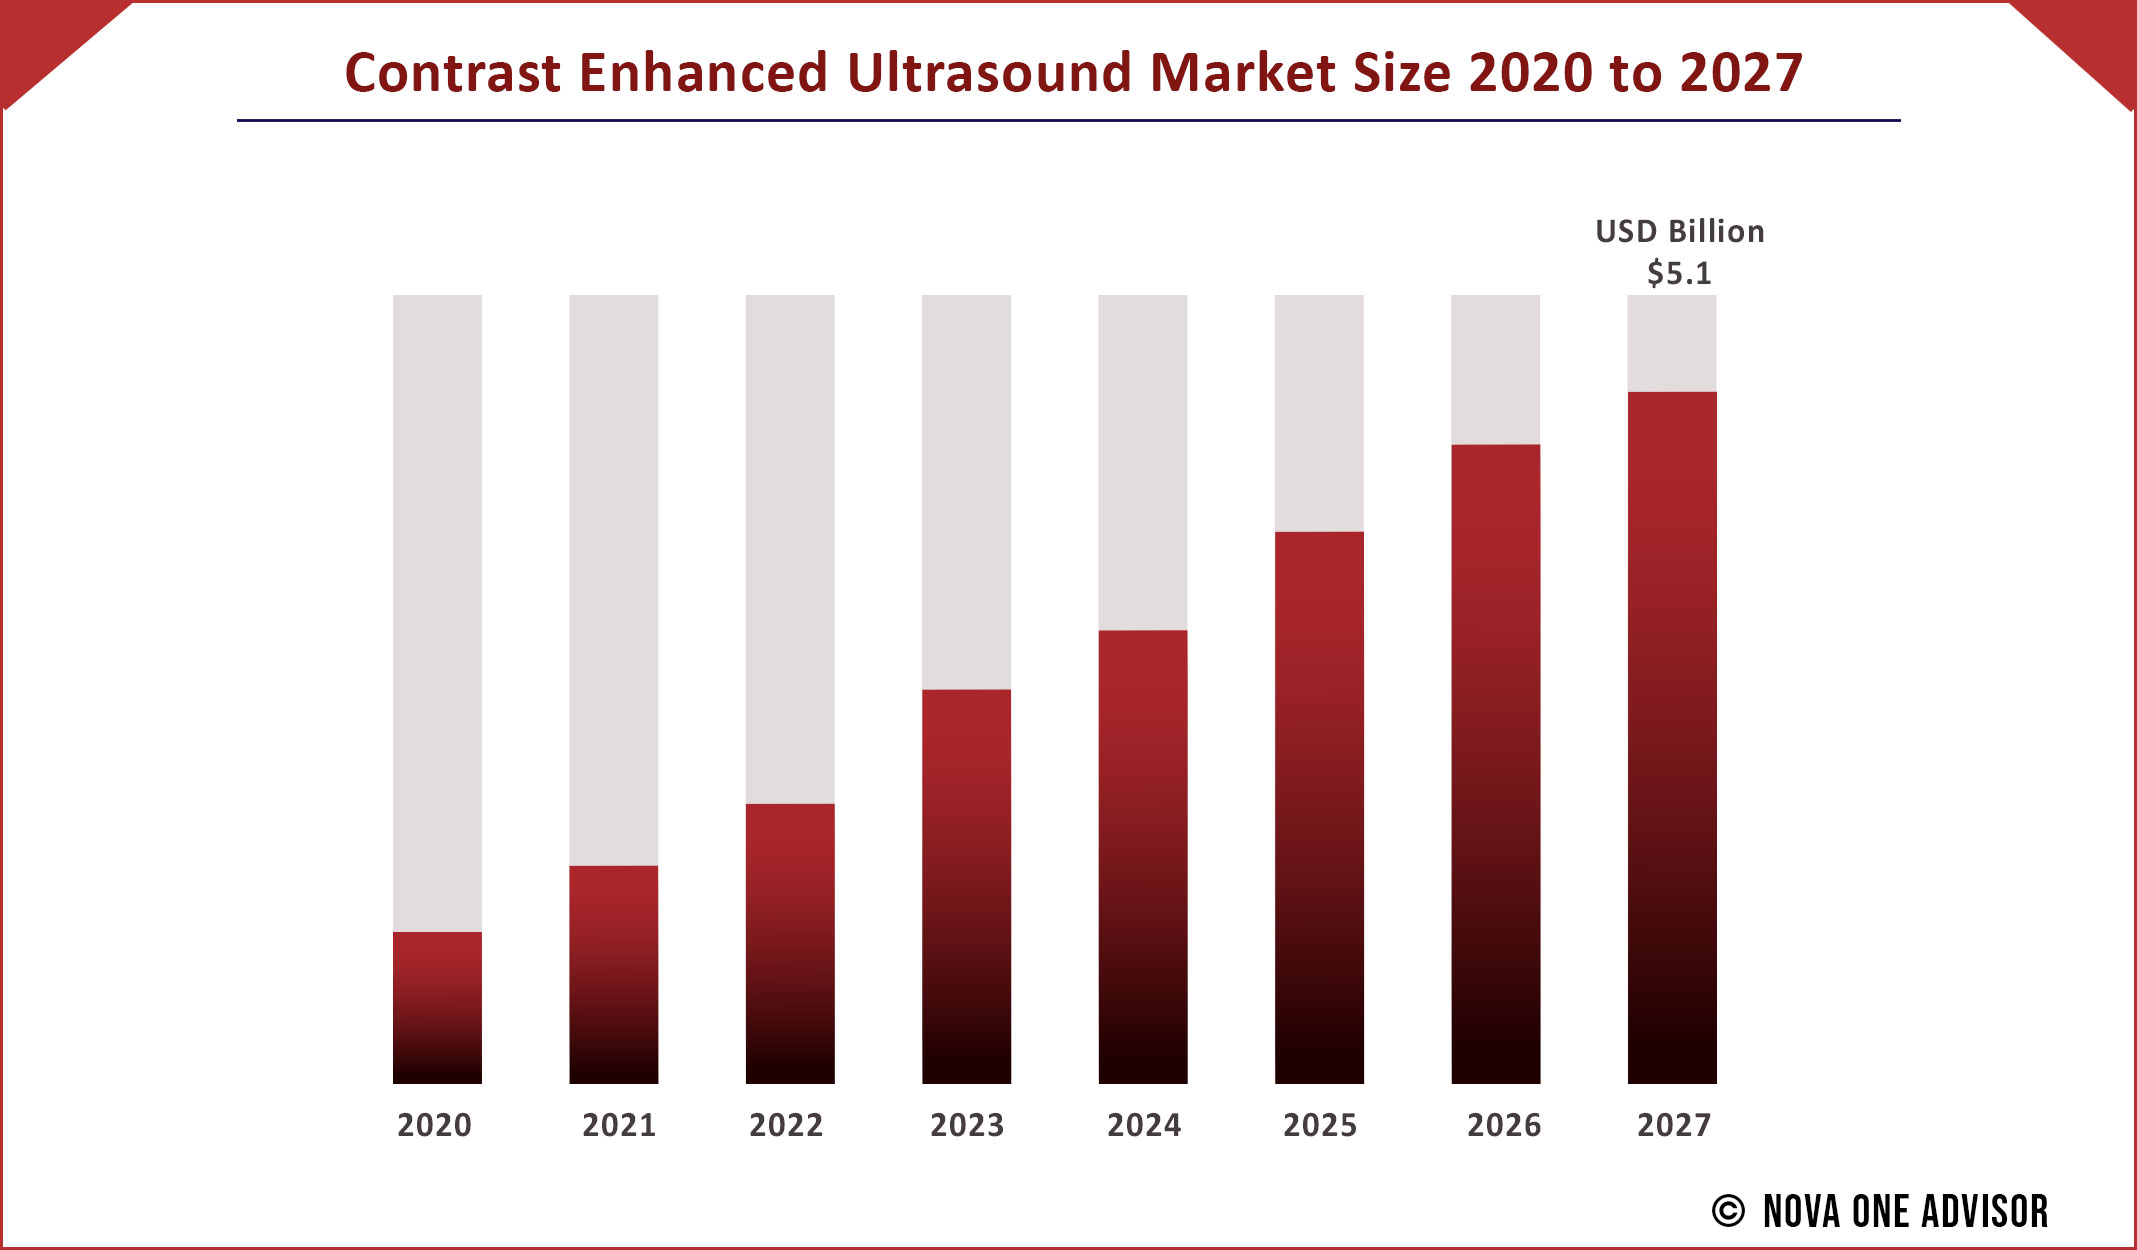 Contrast Enhanced Ultrasound Market Size 2020 to 2027